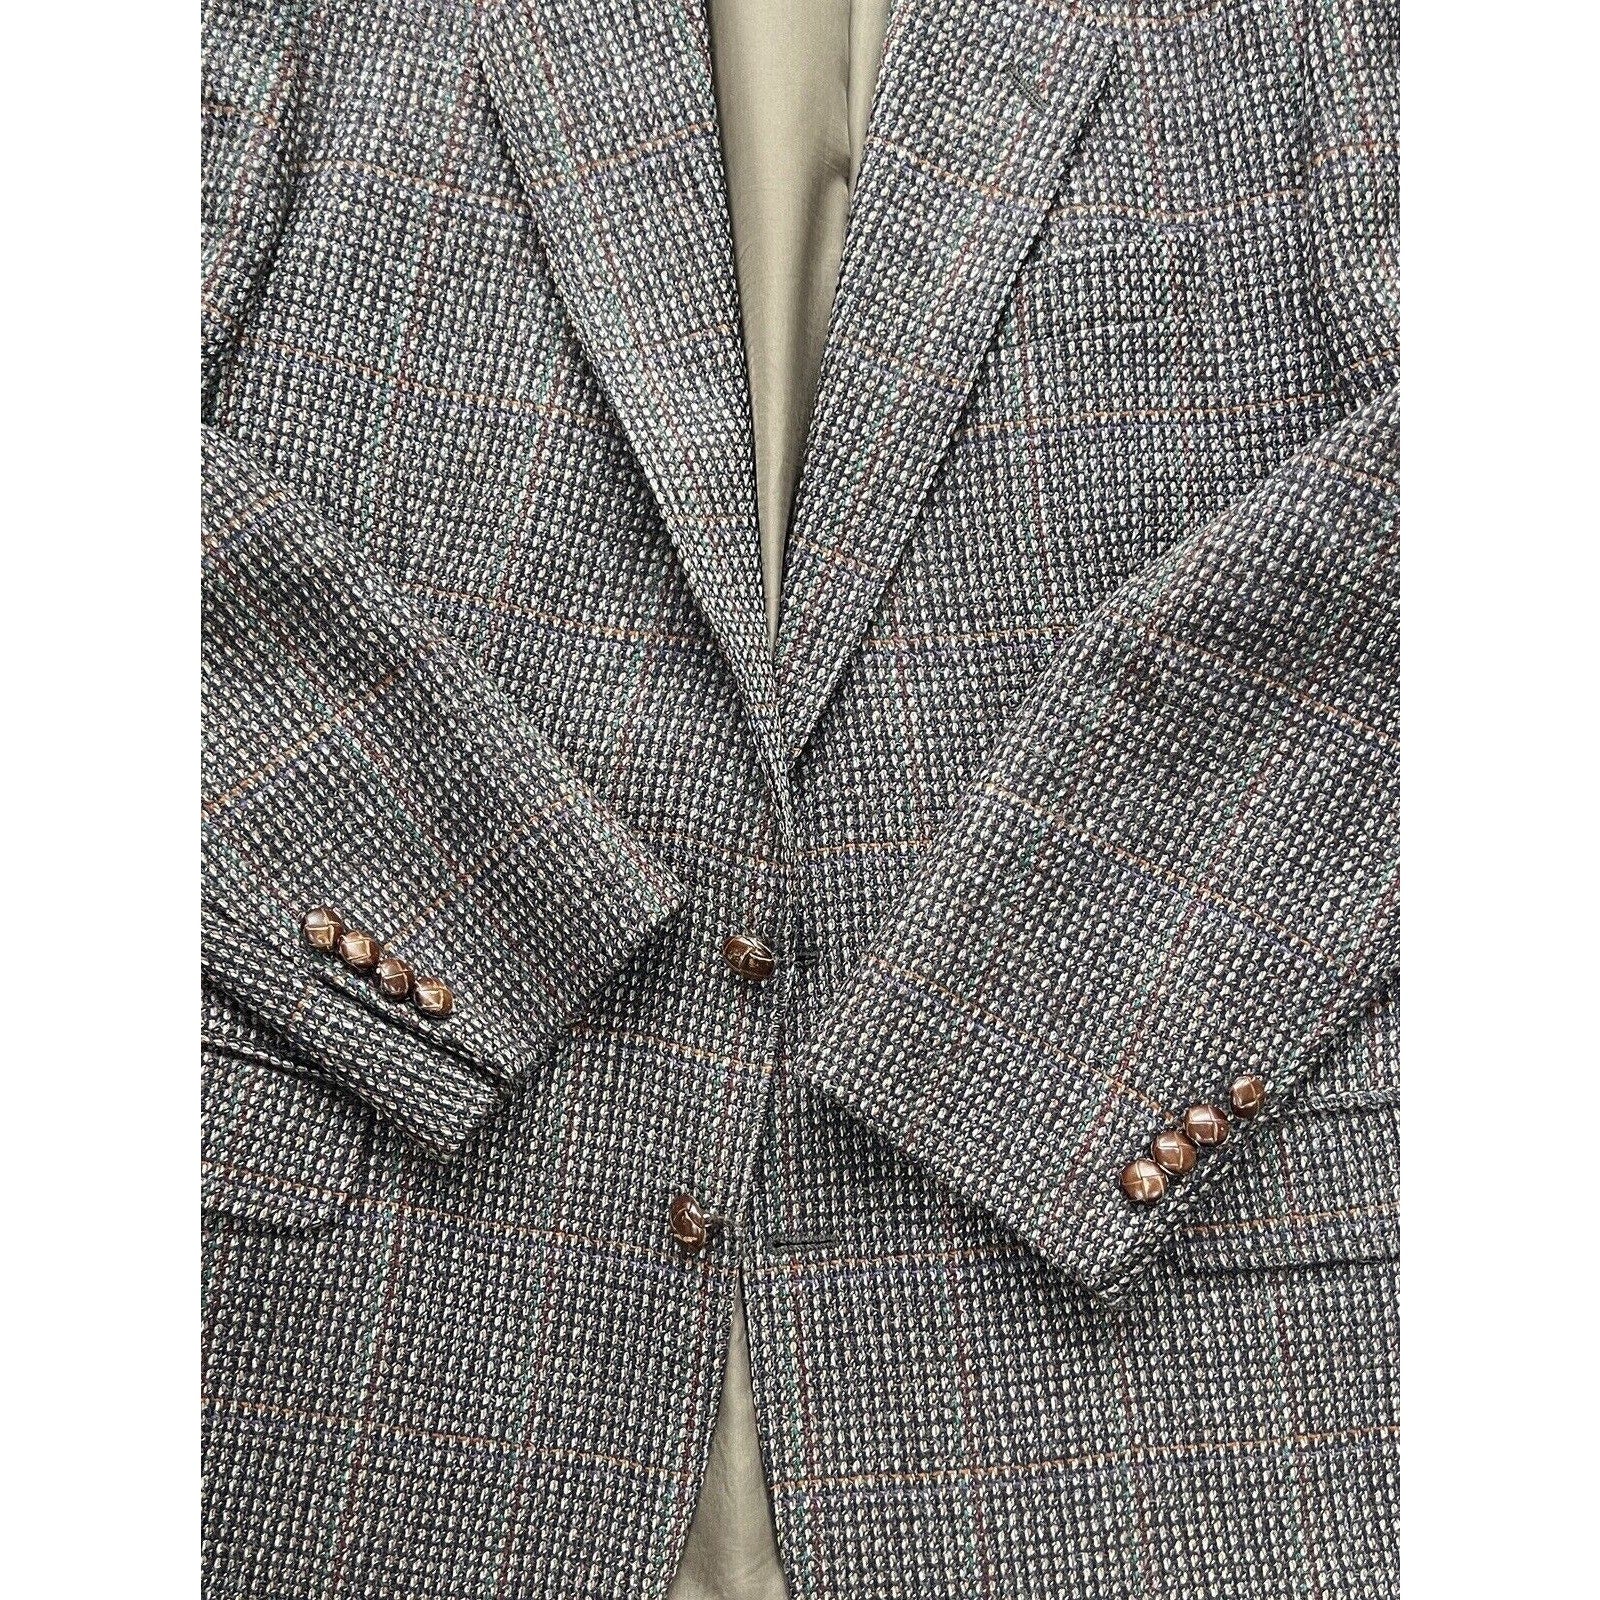 Stafford Sport Coat 43R British Isles Tweed Windowpane England Wool Vintage